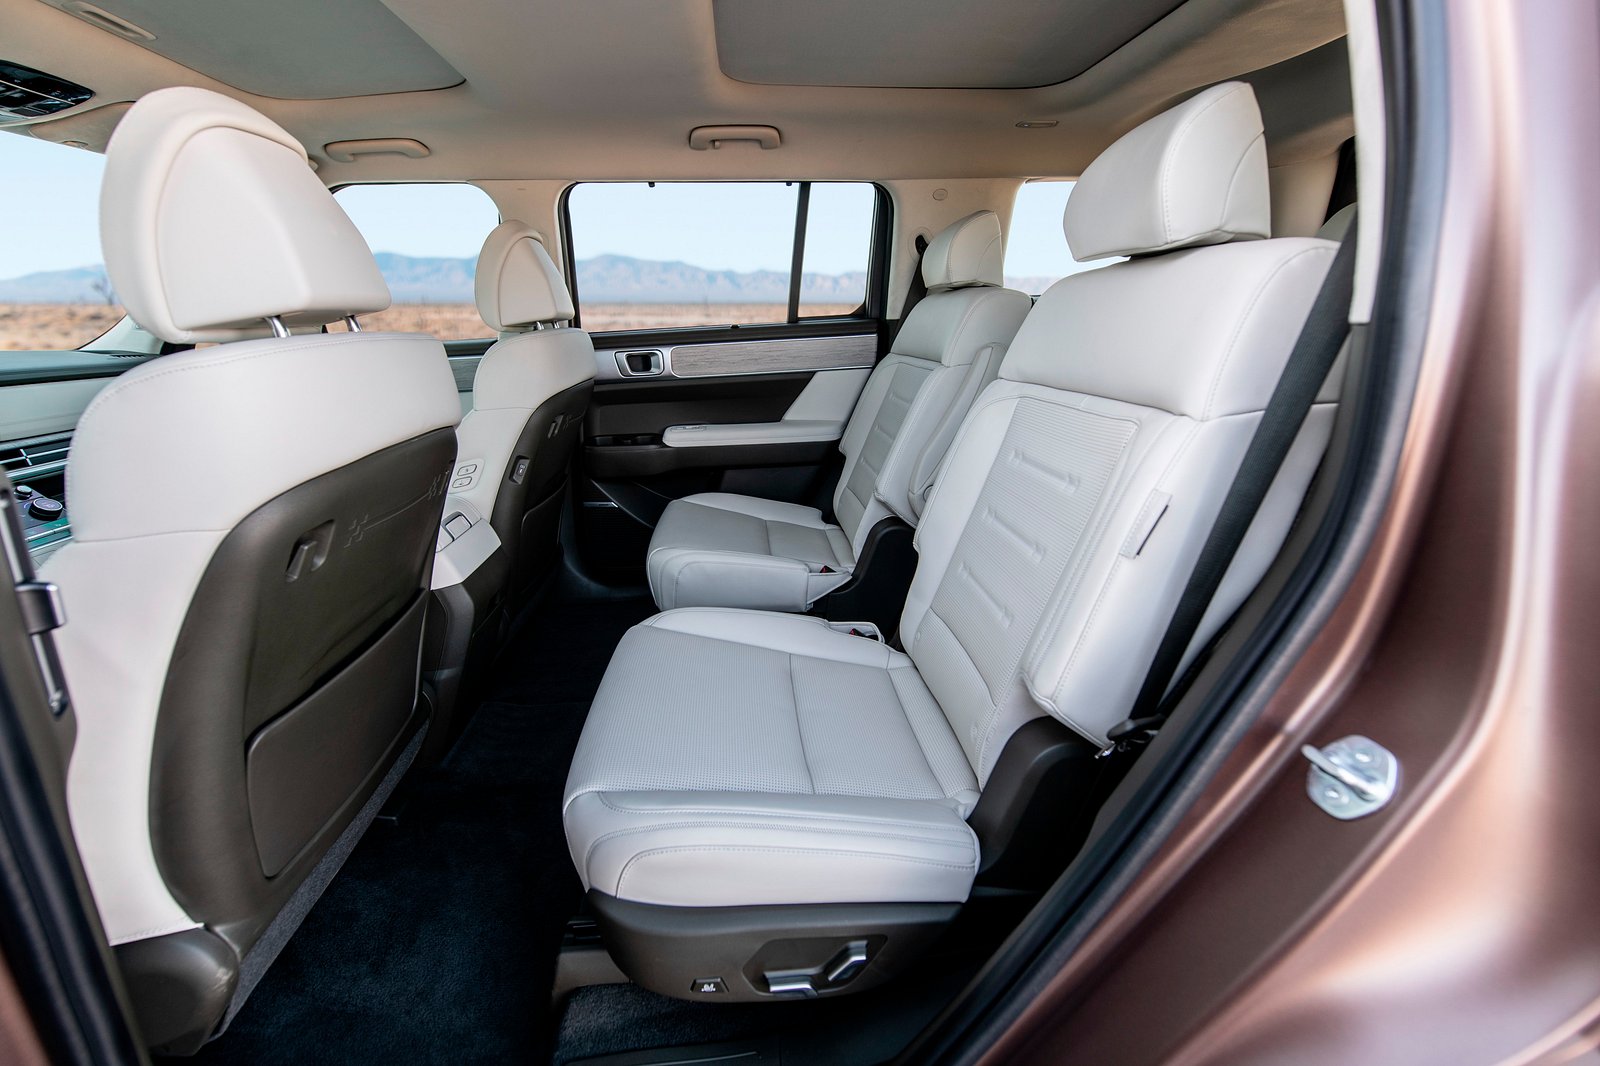 New 2024 Hyundai SANTA FE: Exterior & Interior Specs